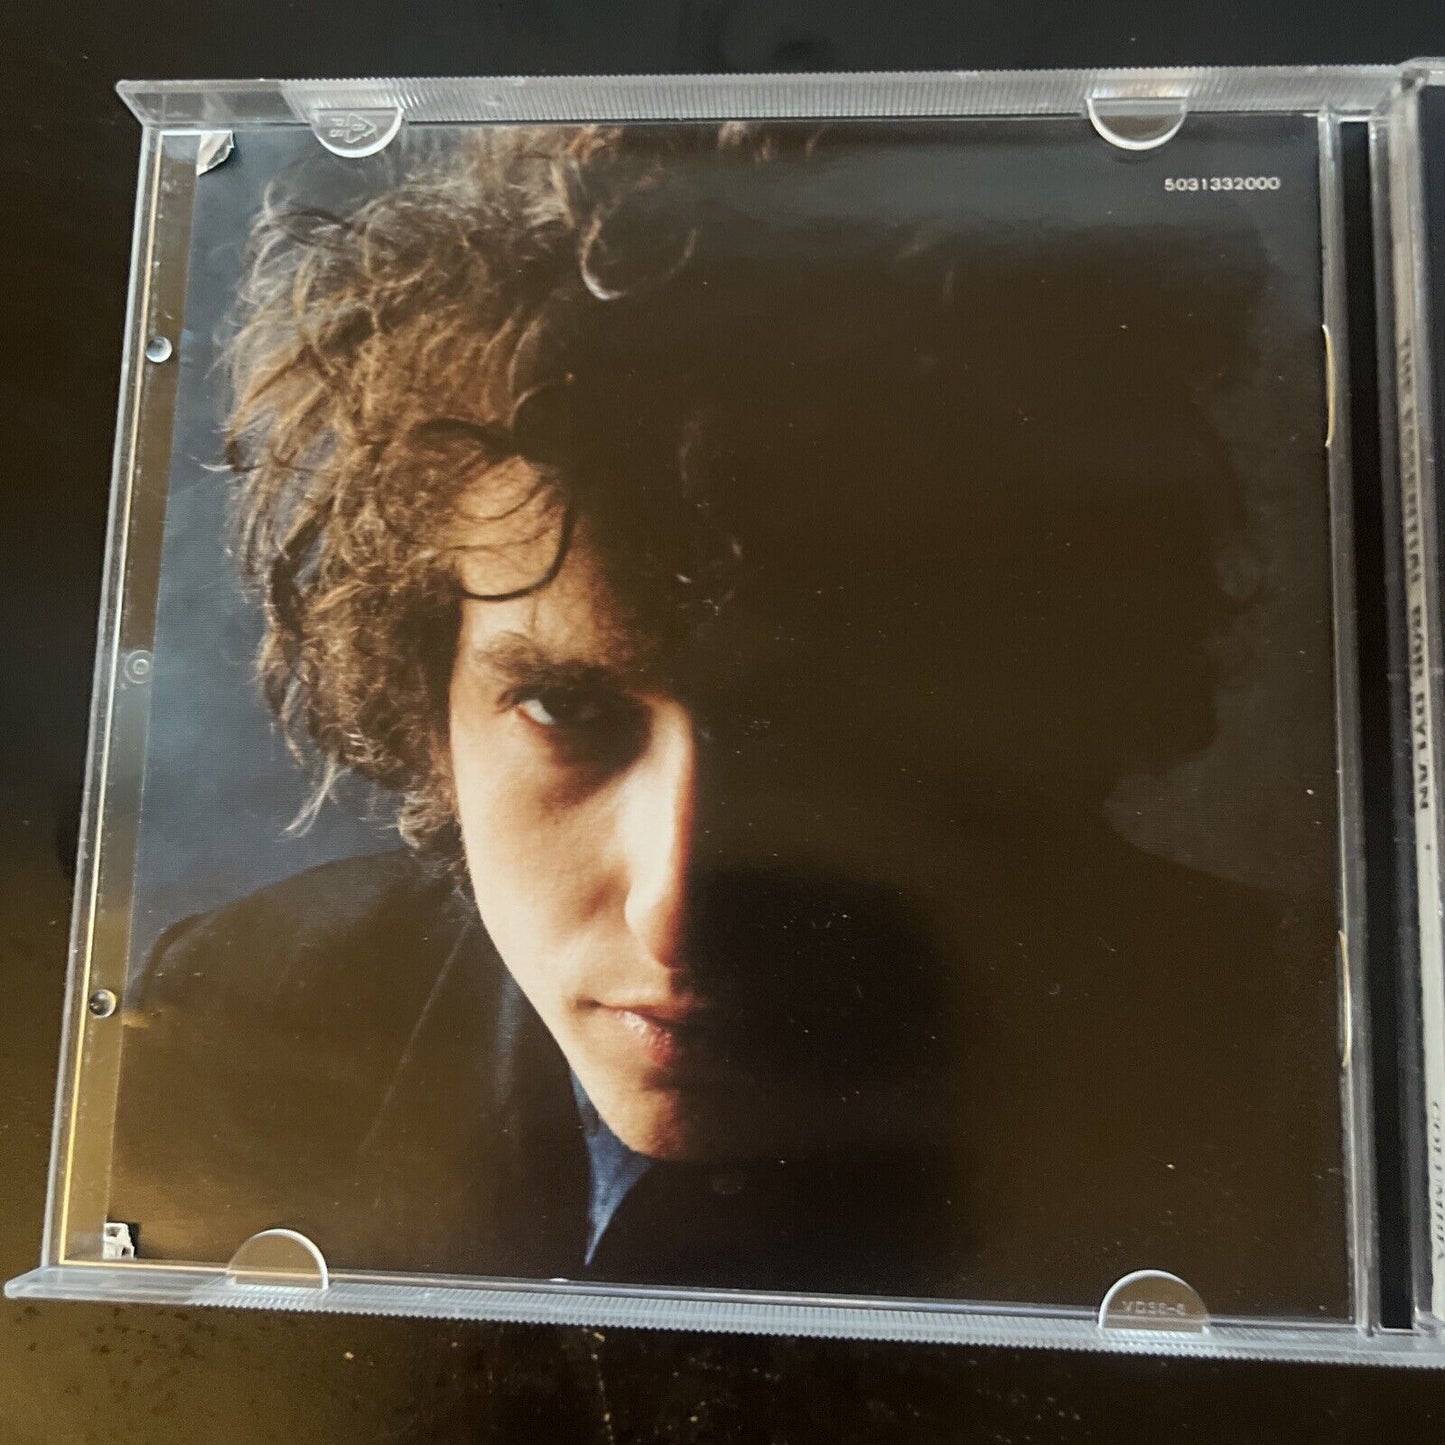 Bob Dylan – The Essential Bob Dylan (CD, 2-CD Set, 2000)